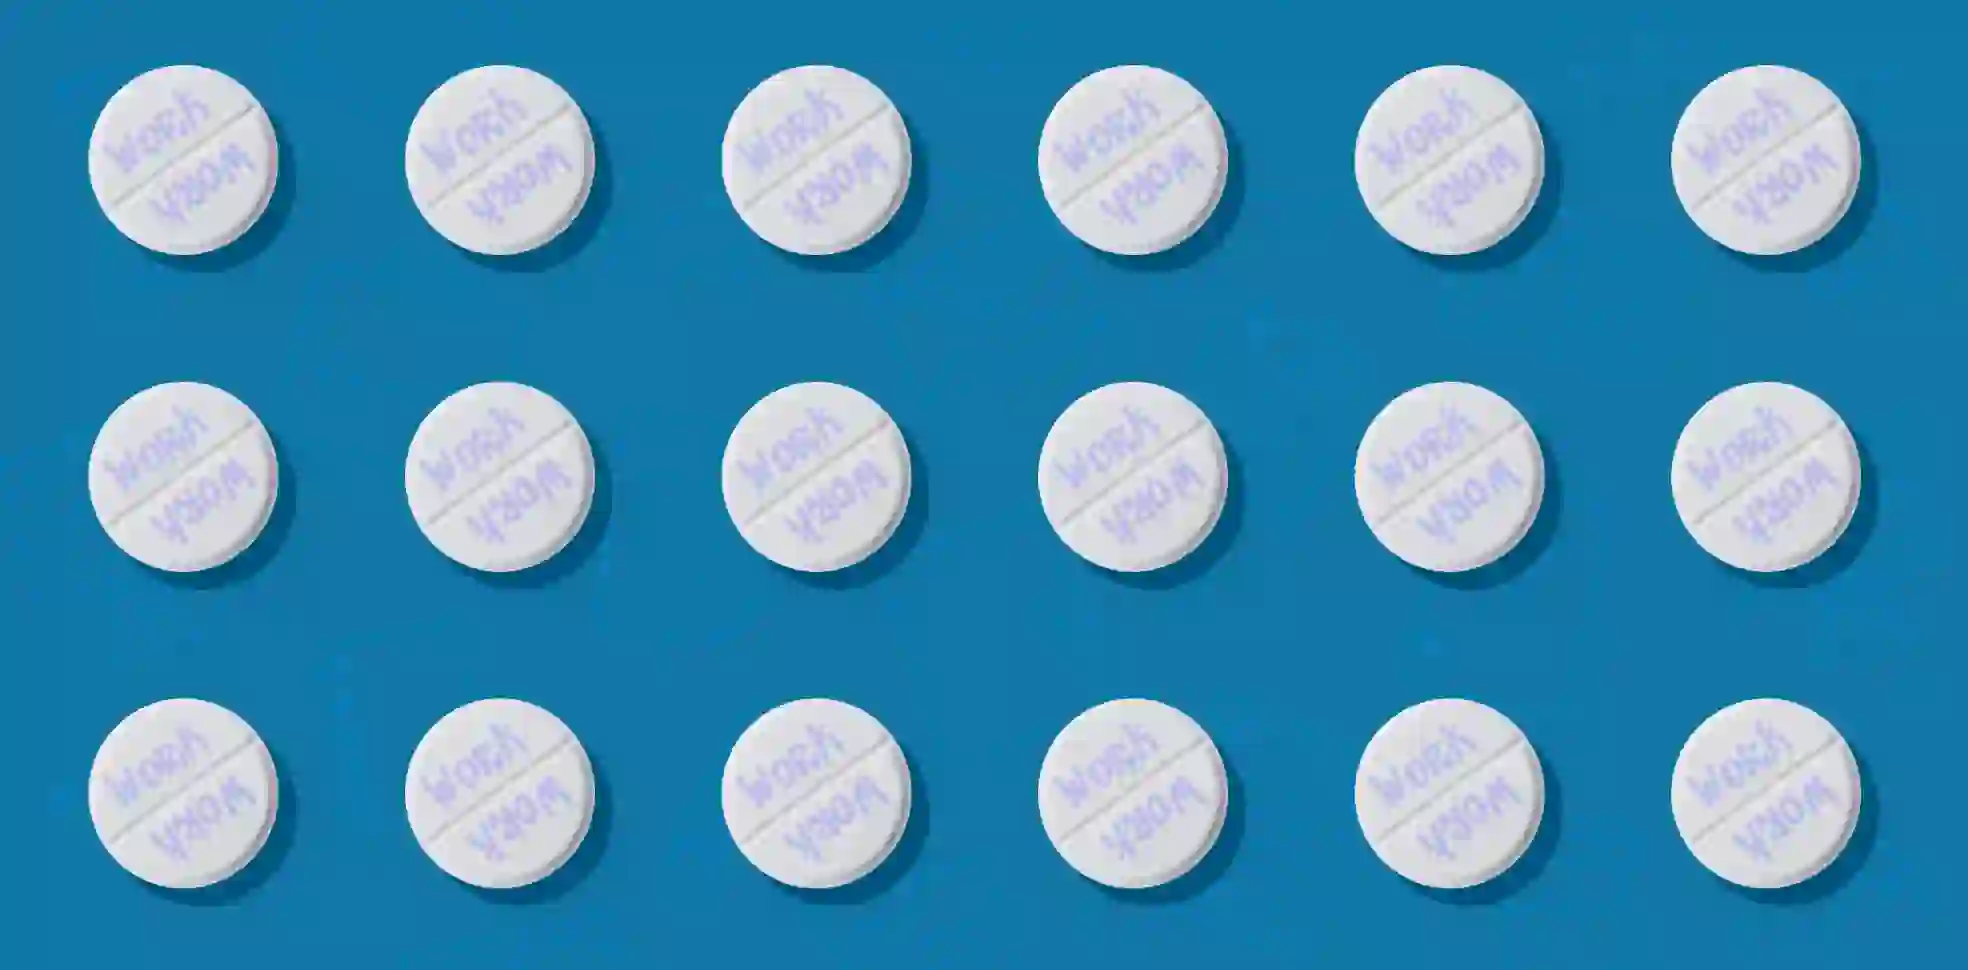 Rows of pills symbolizing work addiction